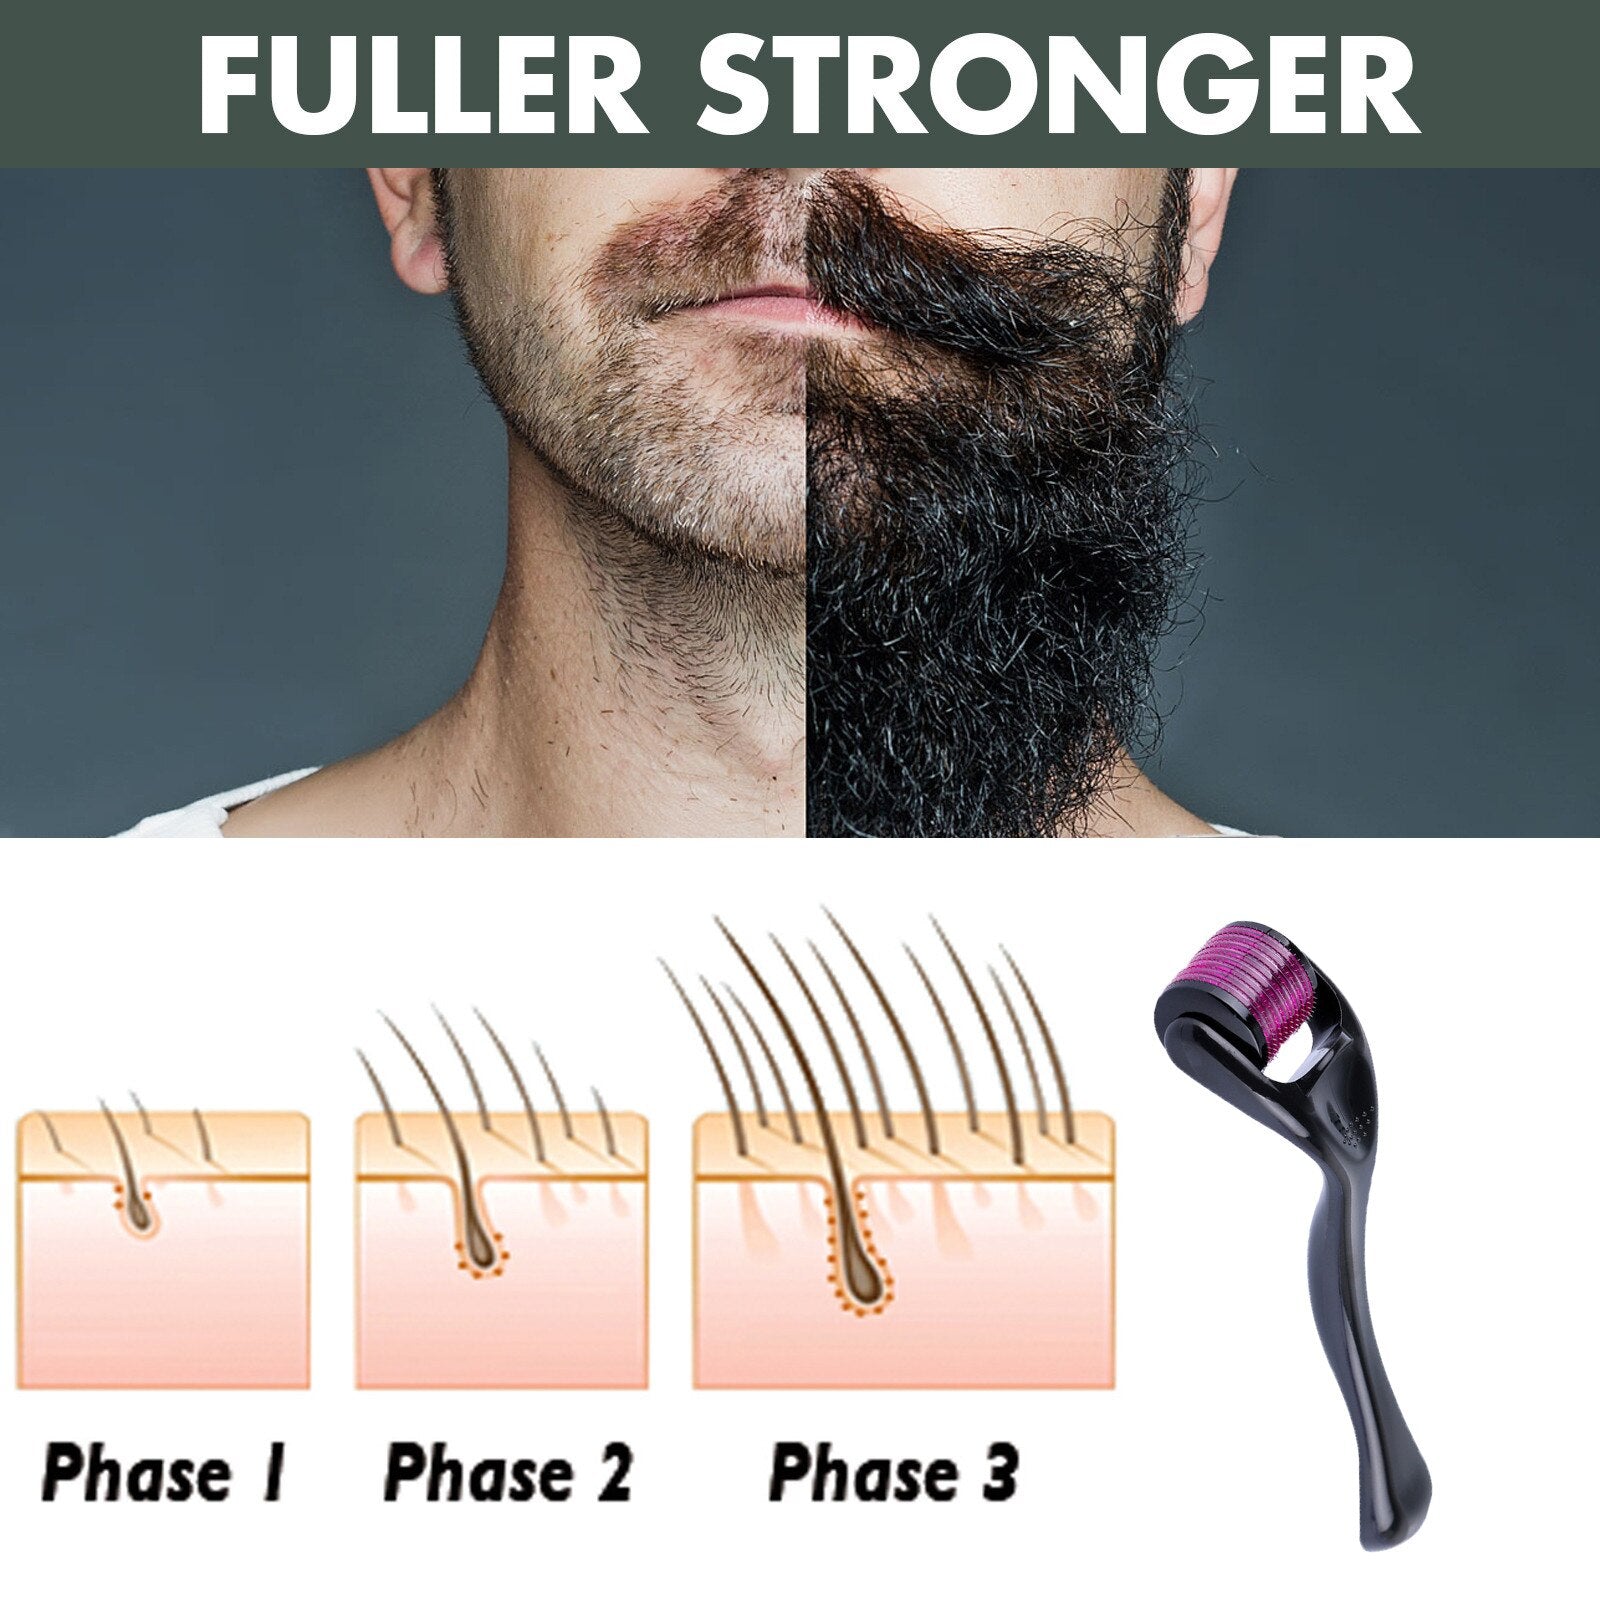 Beard Roller